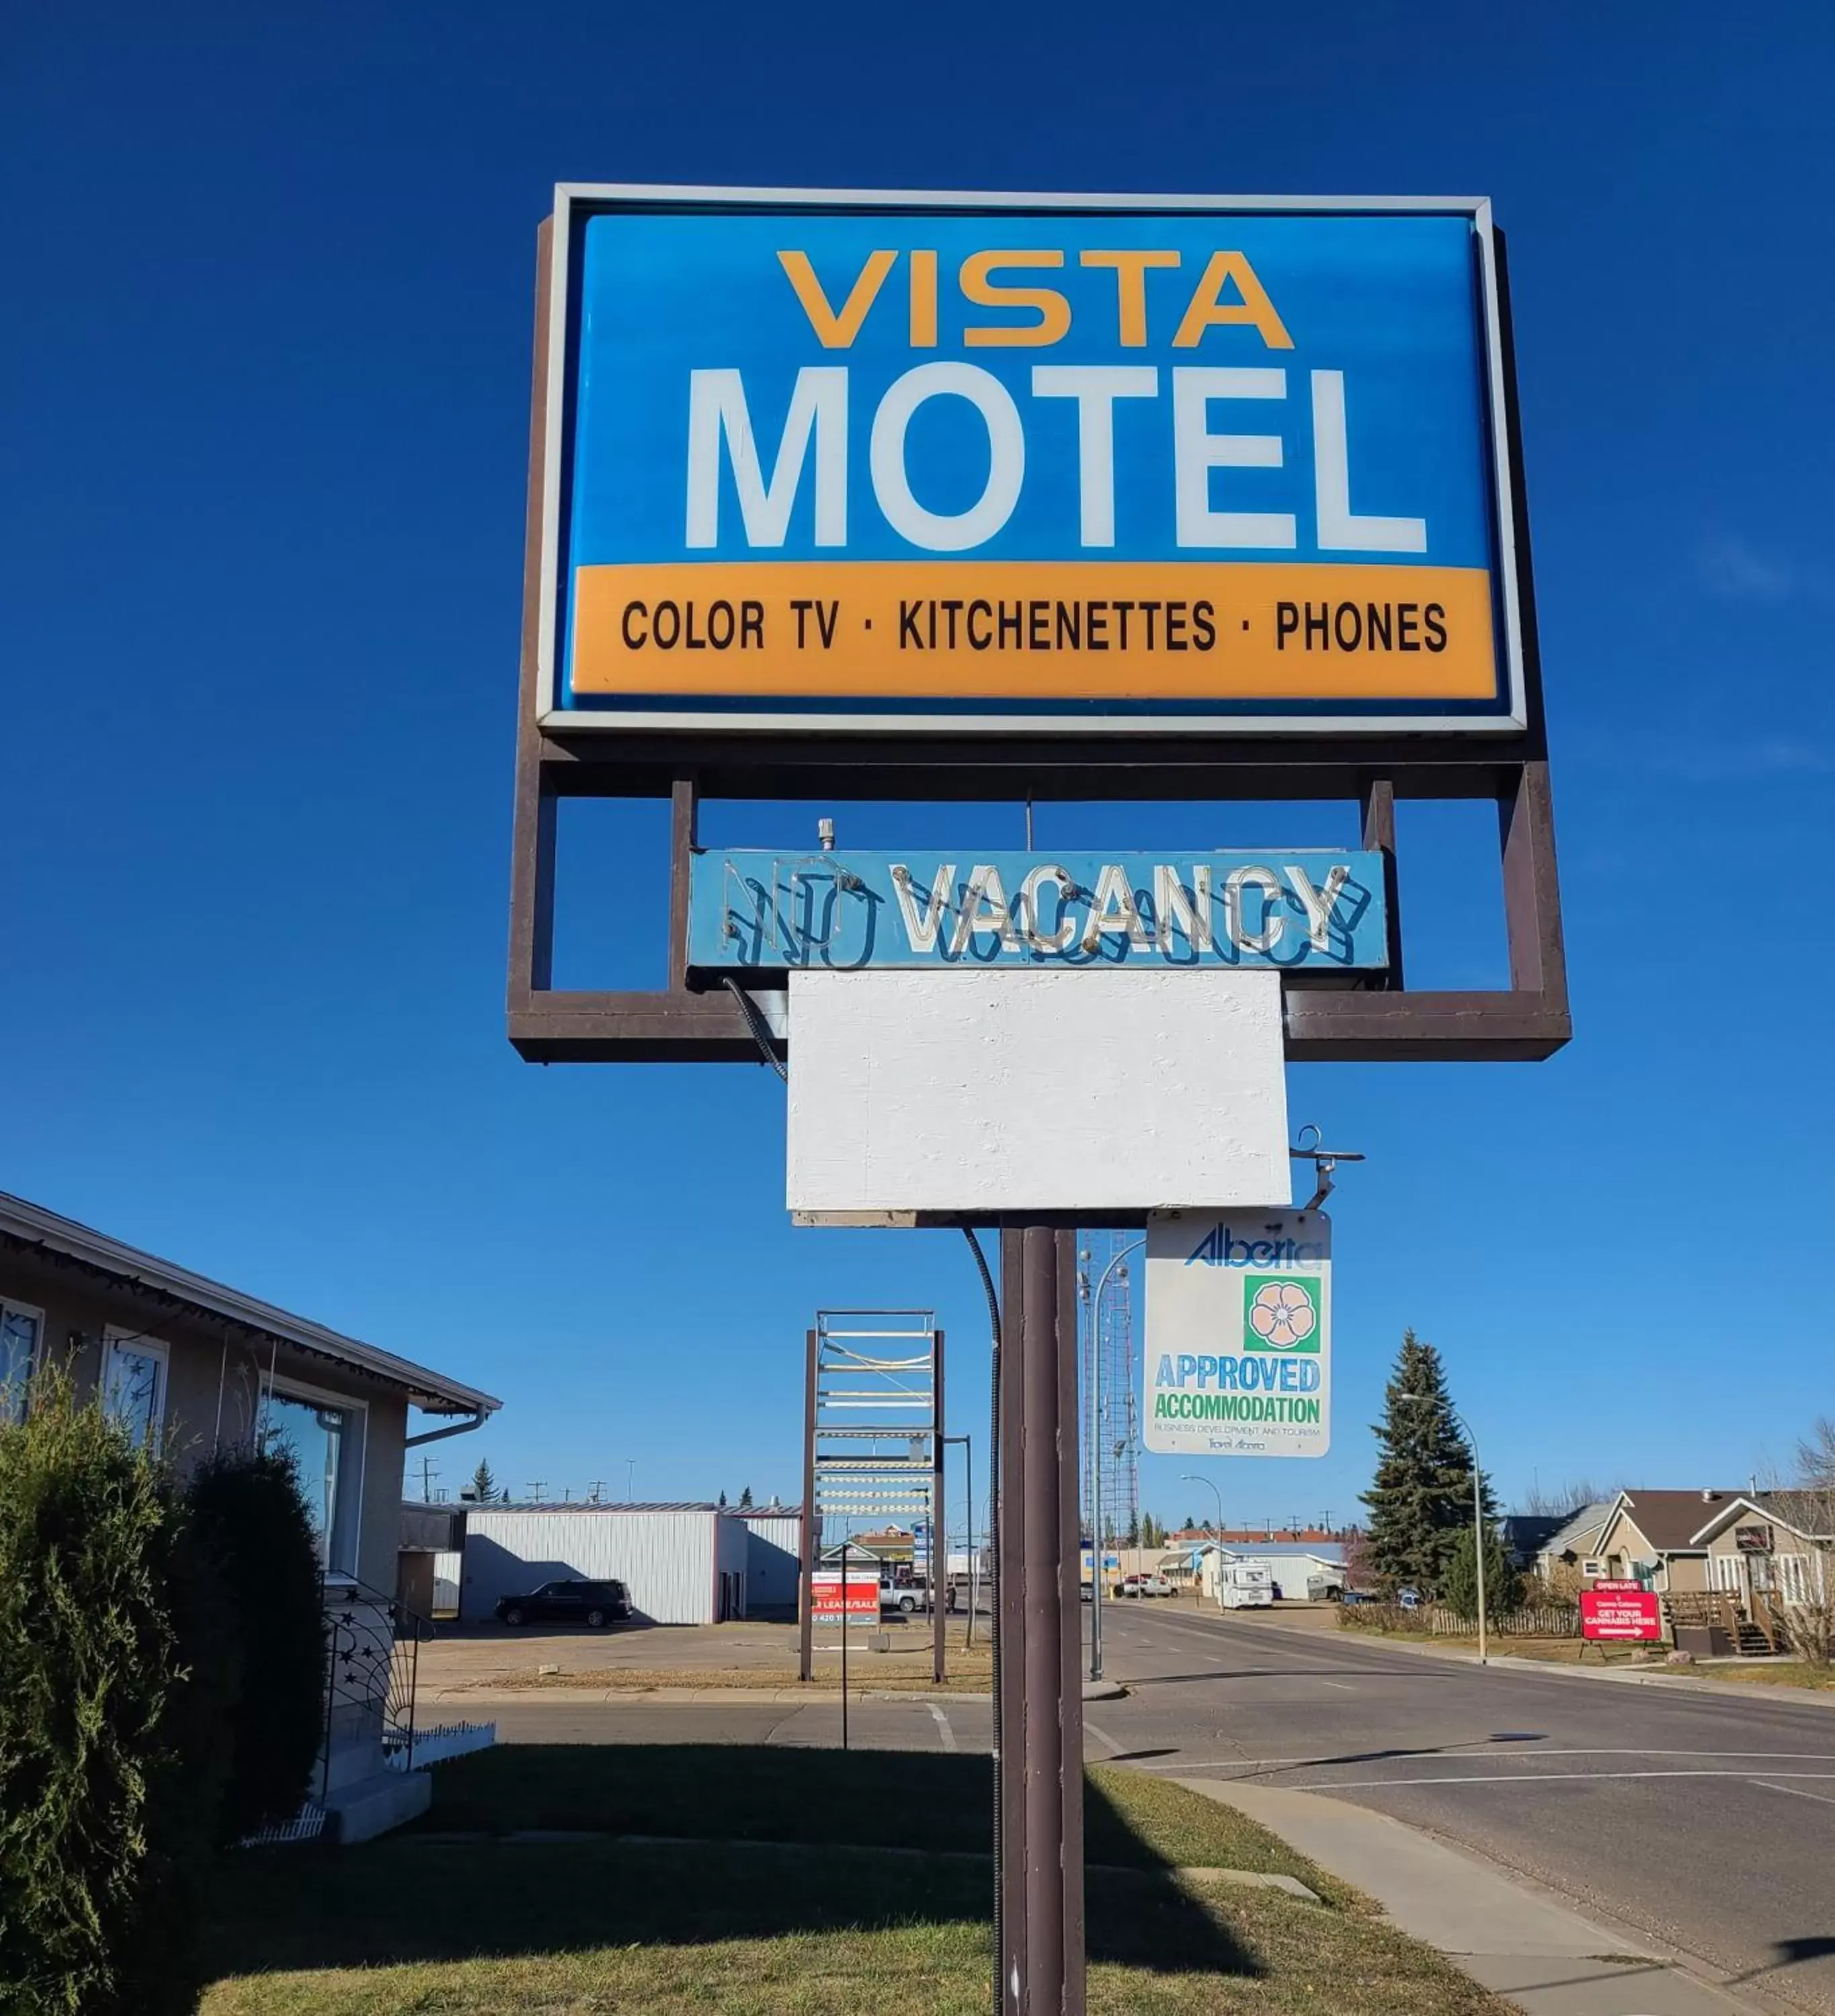 Property building in Vista Motel